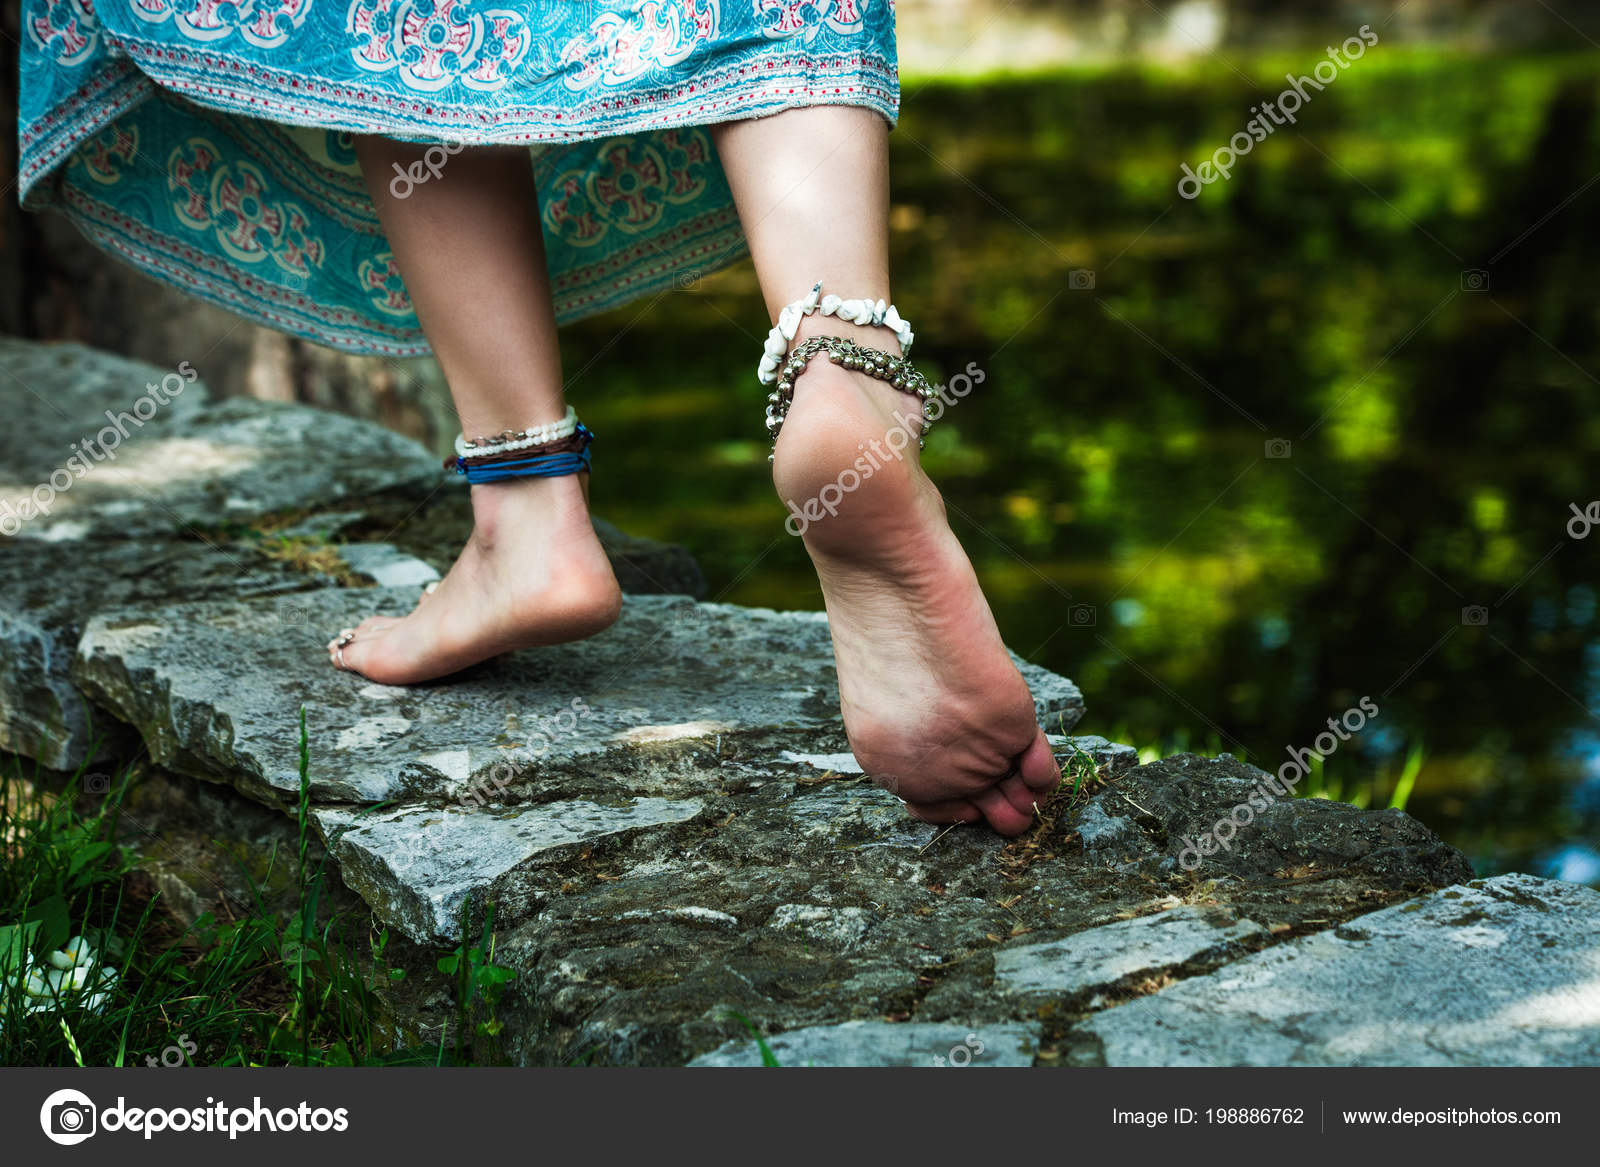 https://st4.depositphotos.com/1016026/19888/i/1600/depositphotos_198886762-stock-photo-barefoot-woman-walk-summer-boho.jpg